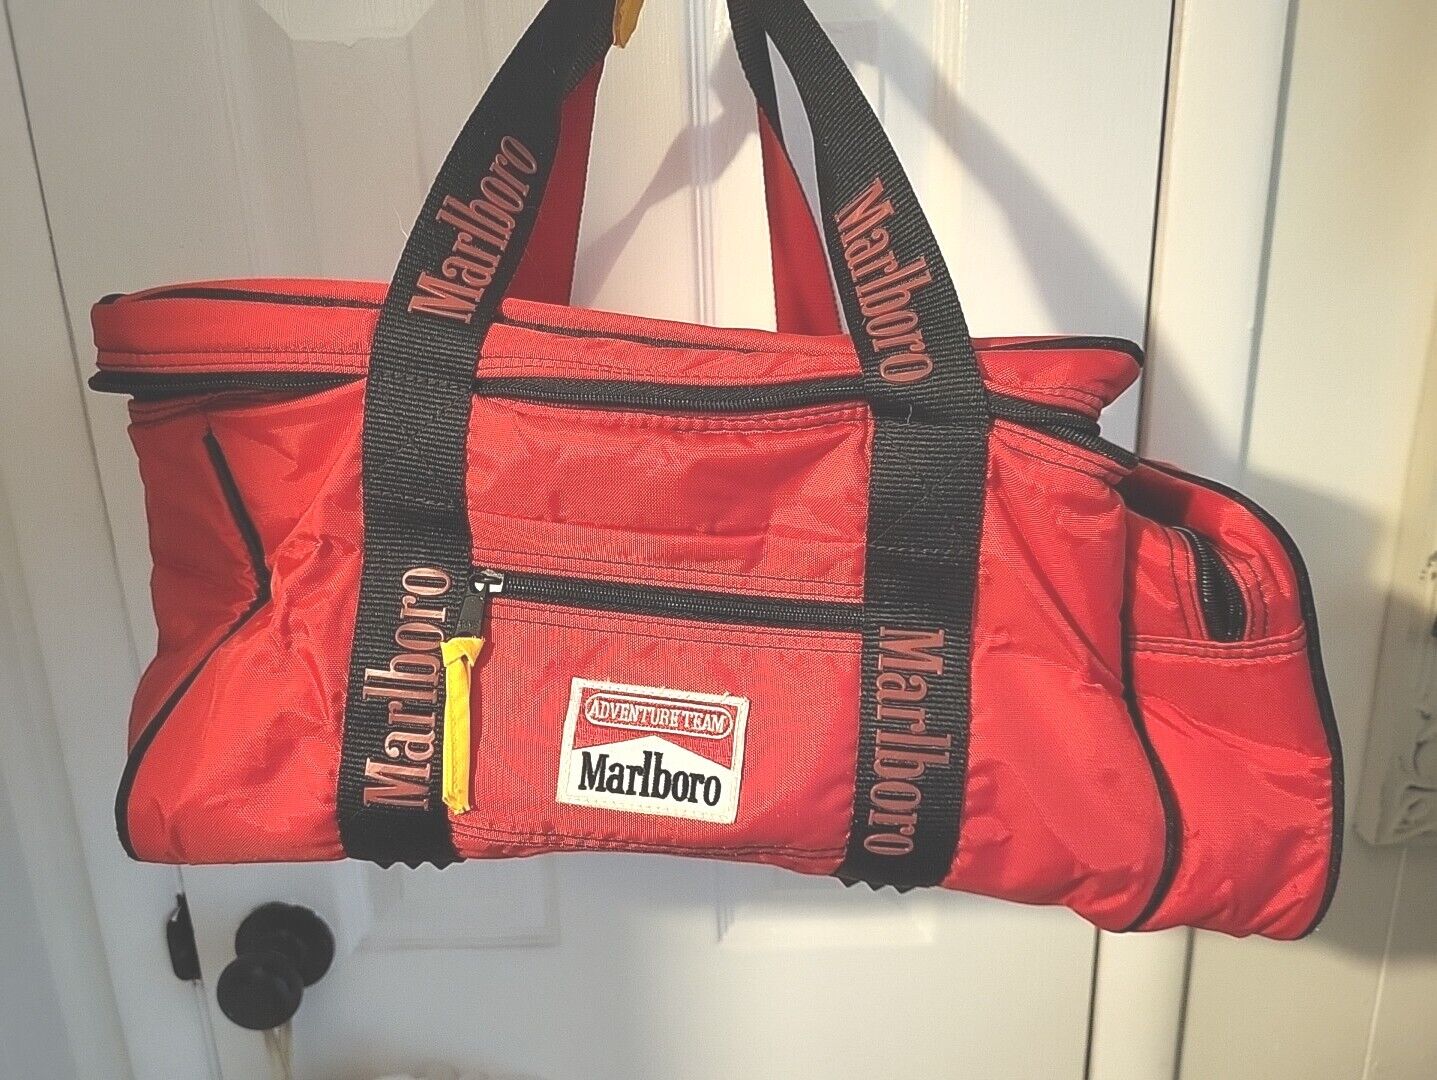 Vtg Marlboro Adventure Team Lizard Rock Insulated Cooler Bag 18” Brand new 